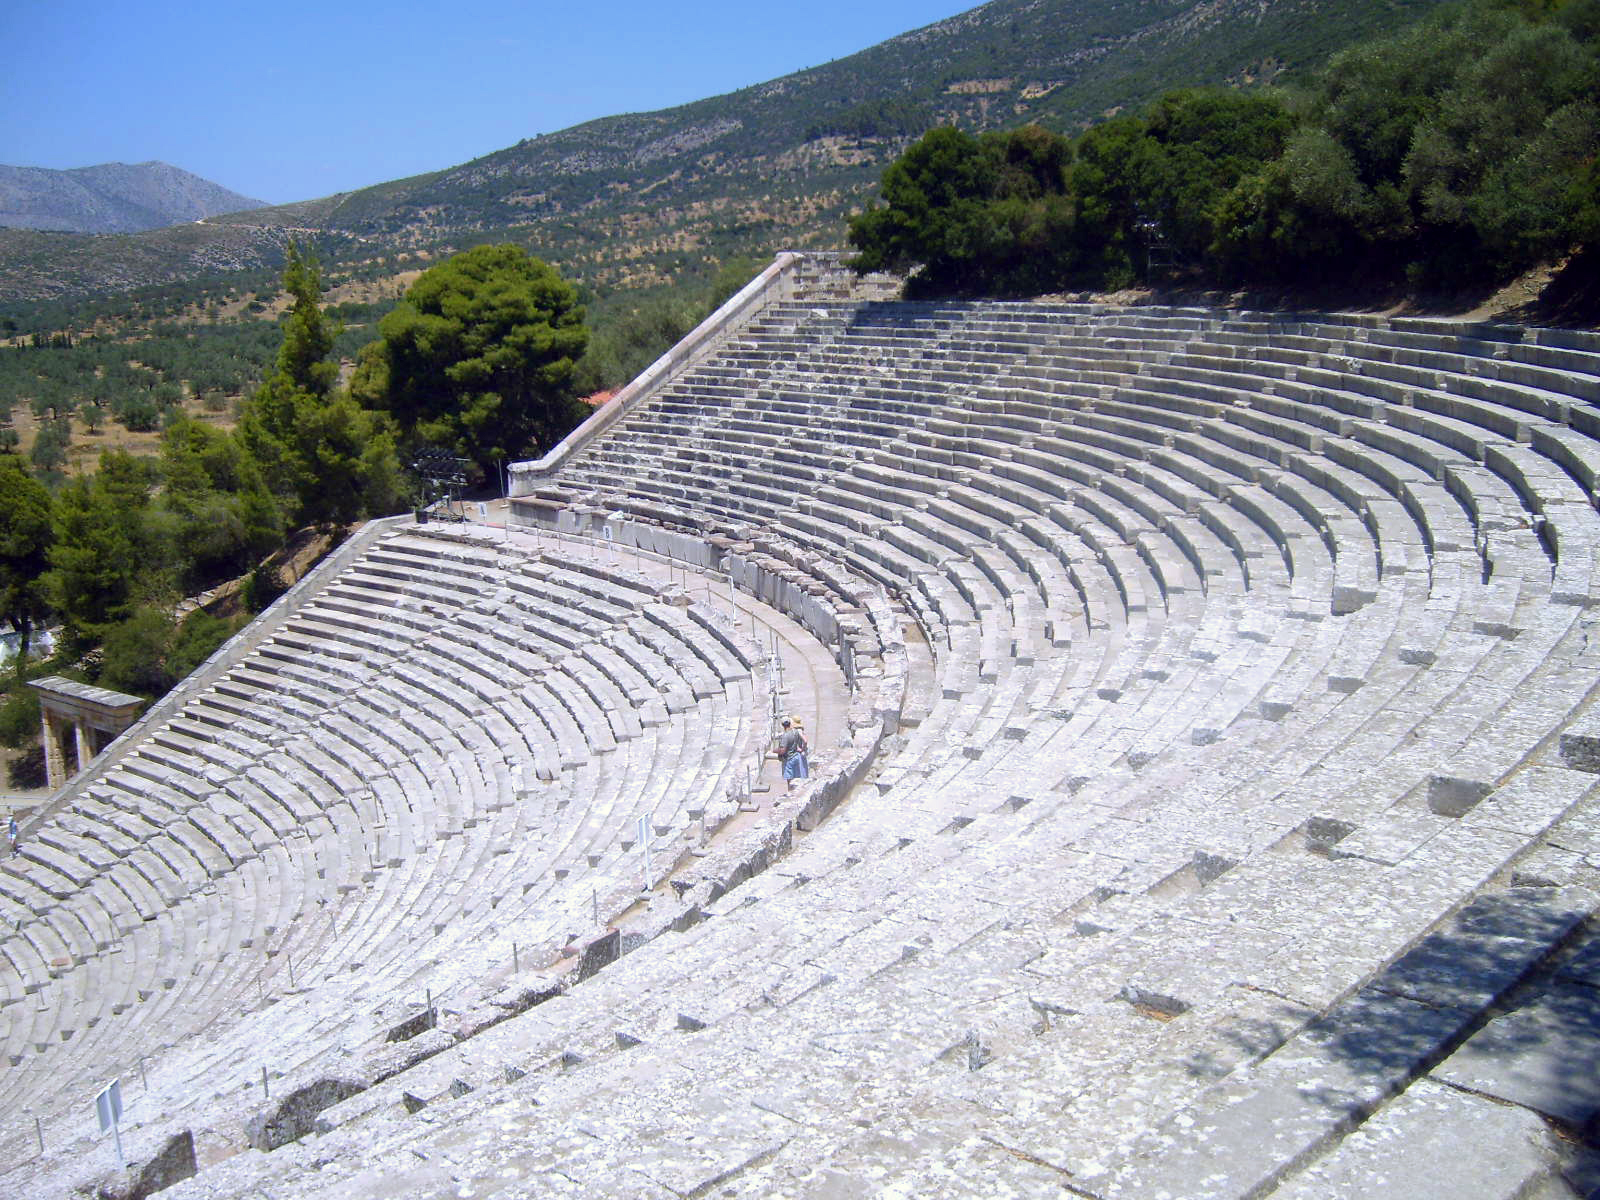 Epidavros 